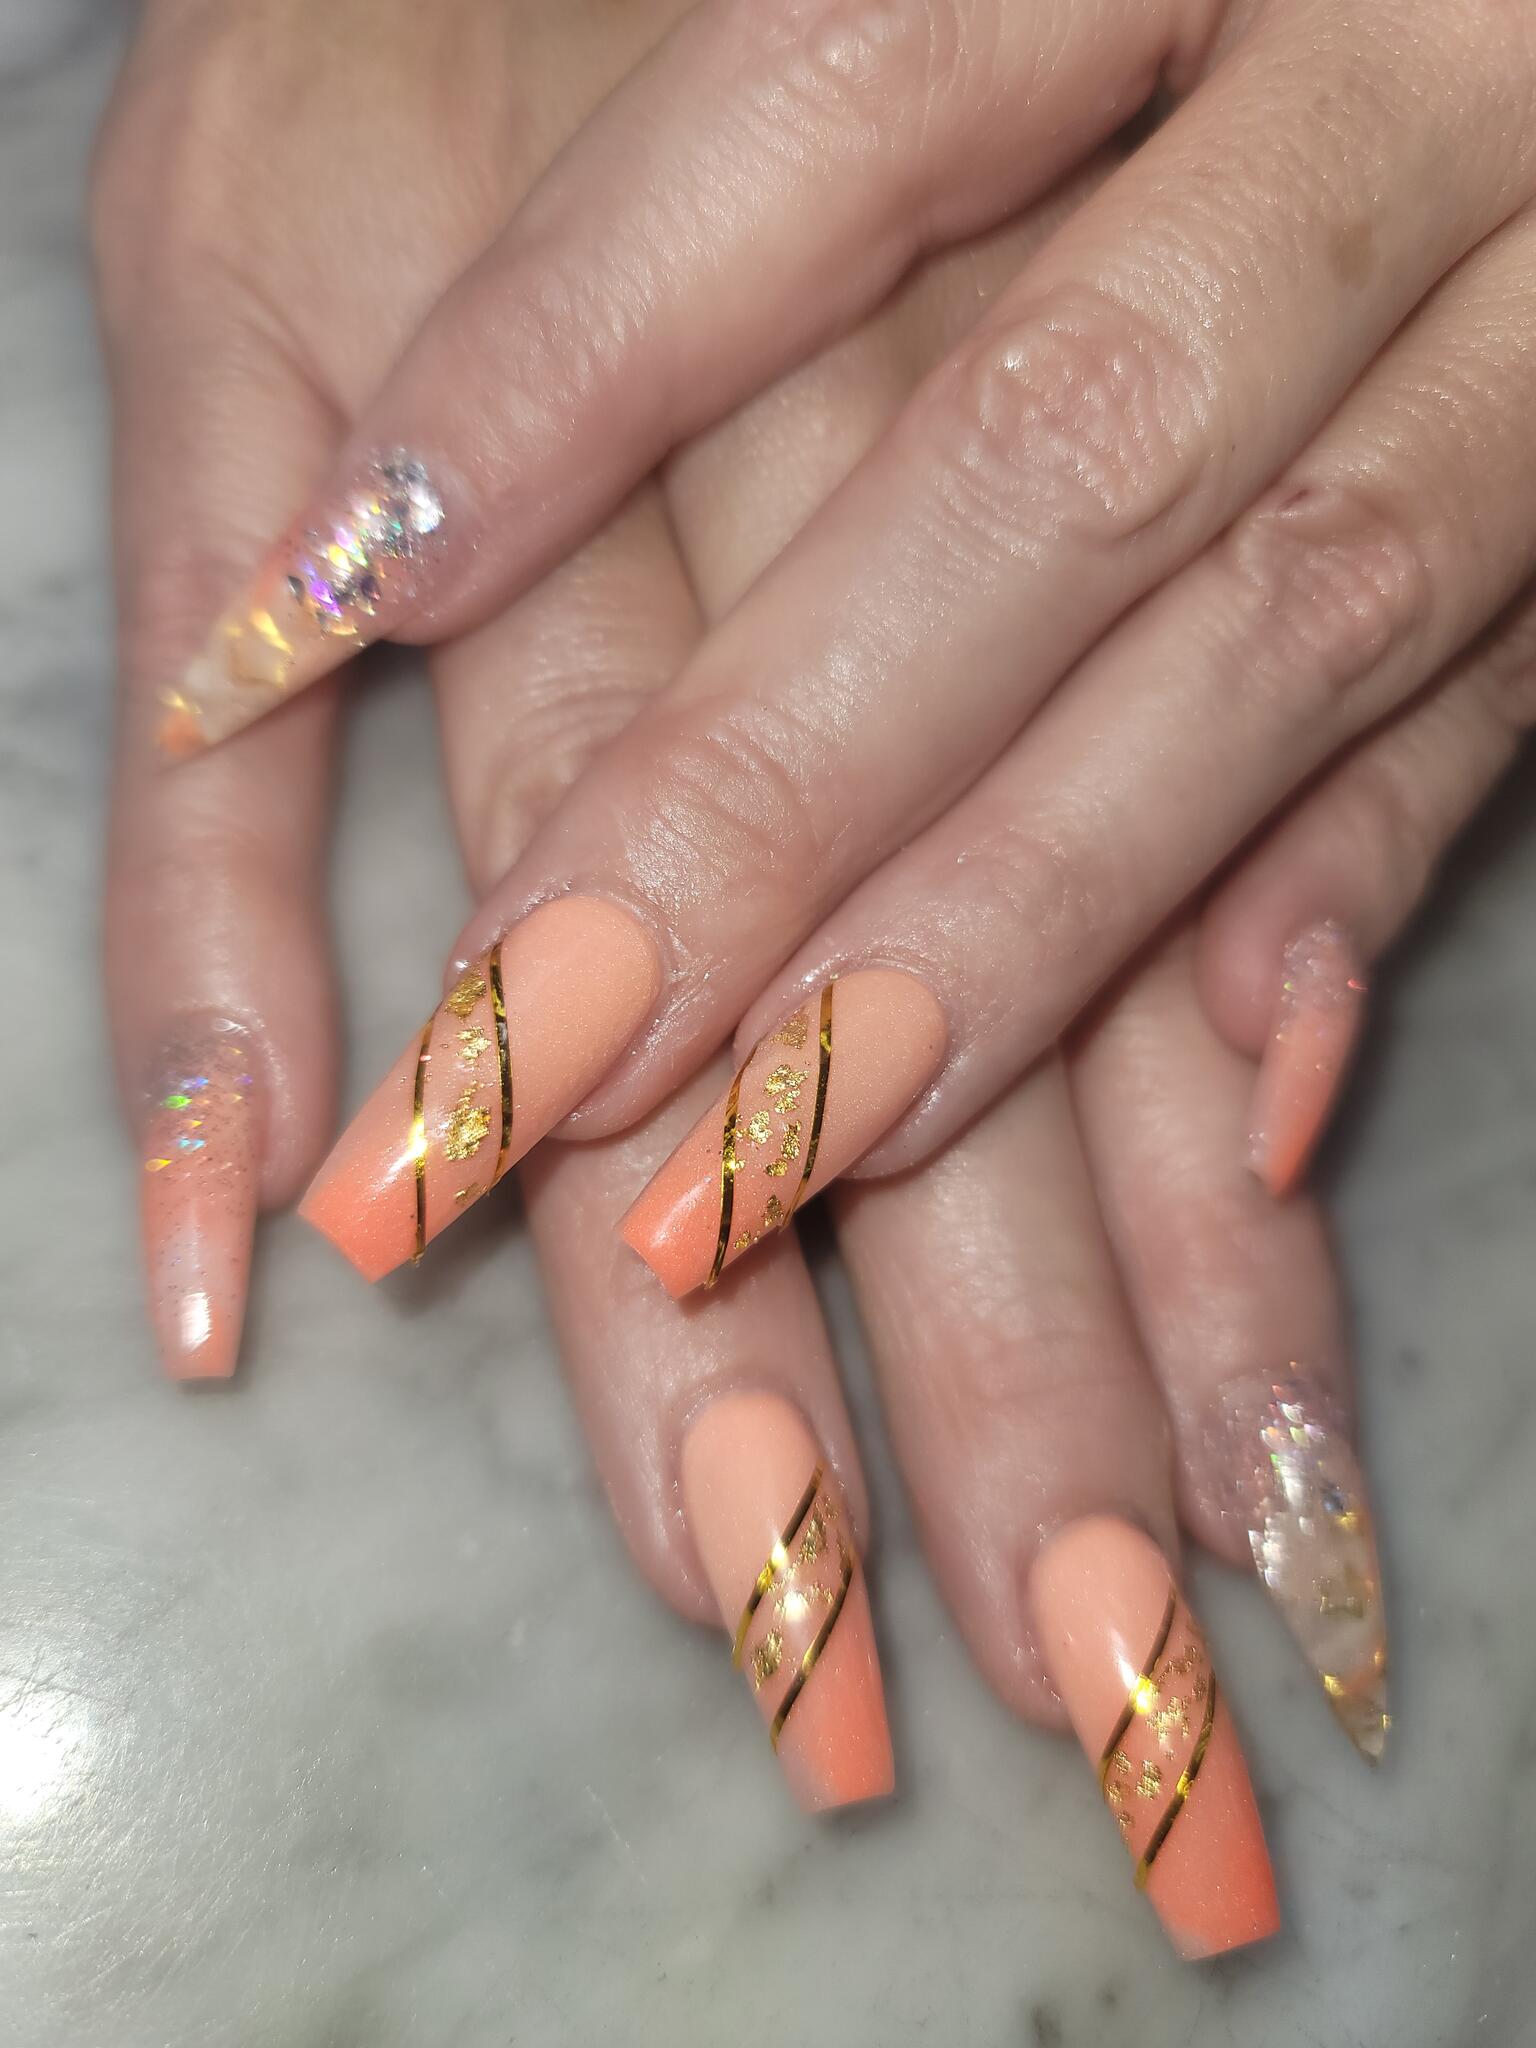 Nails by Cathy - Bradenton, FL 34209